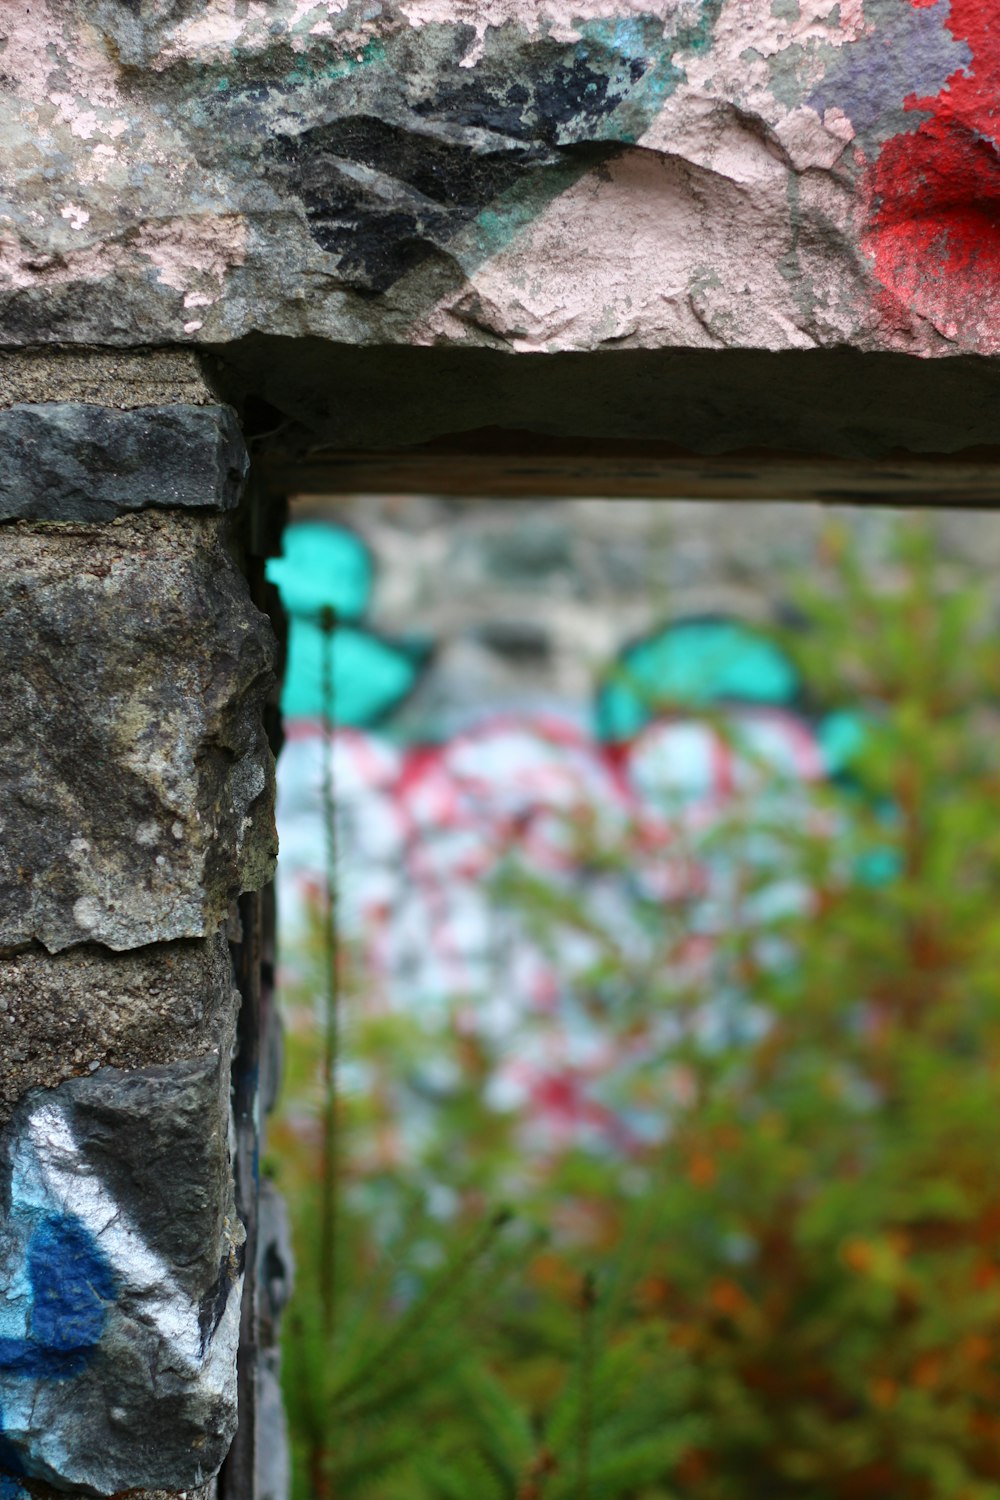 a close up of a brick wall with graffiti on it